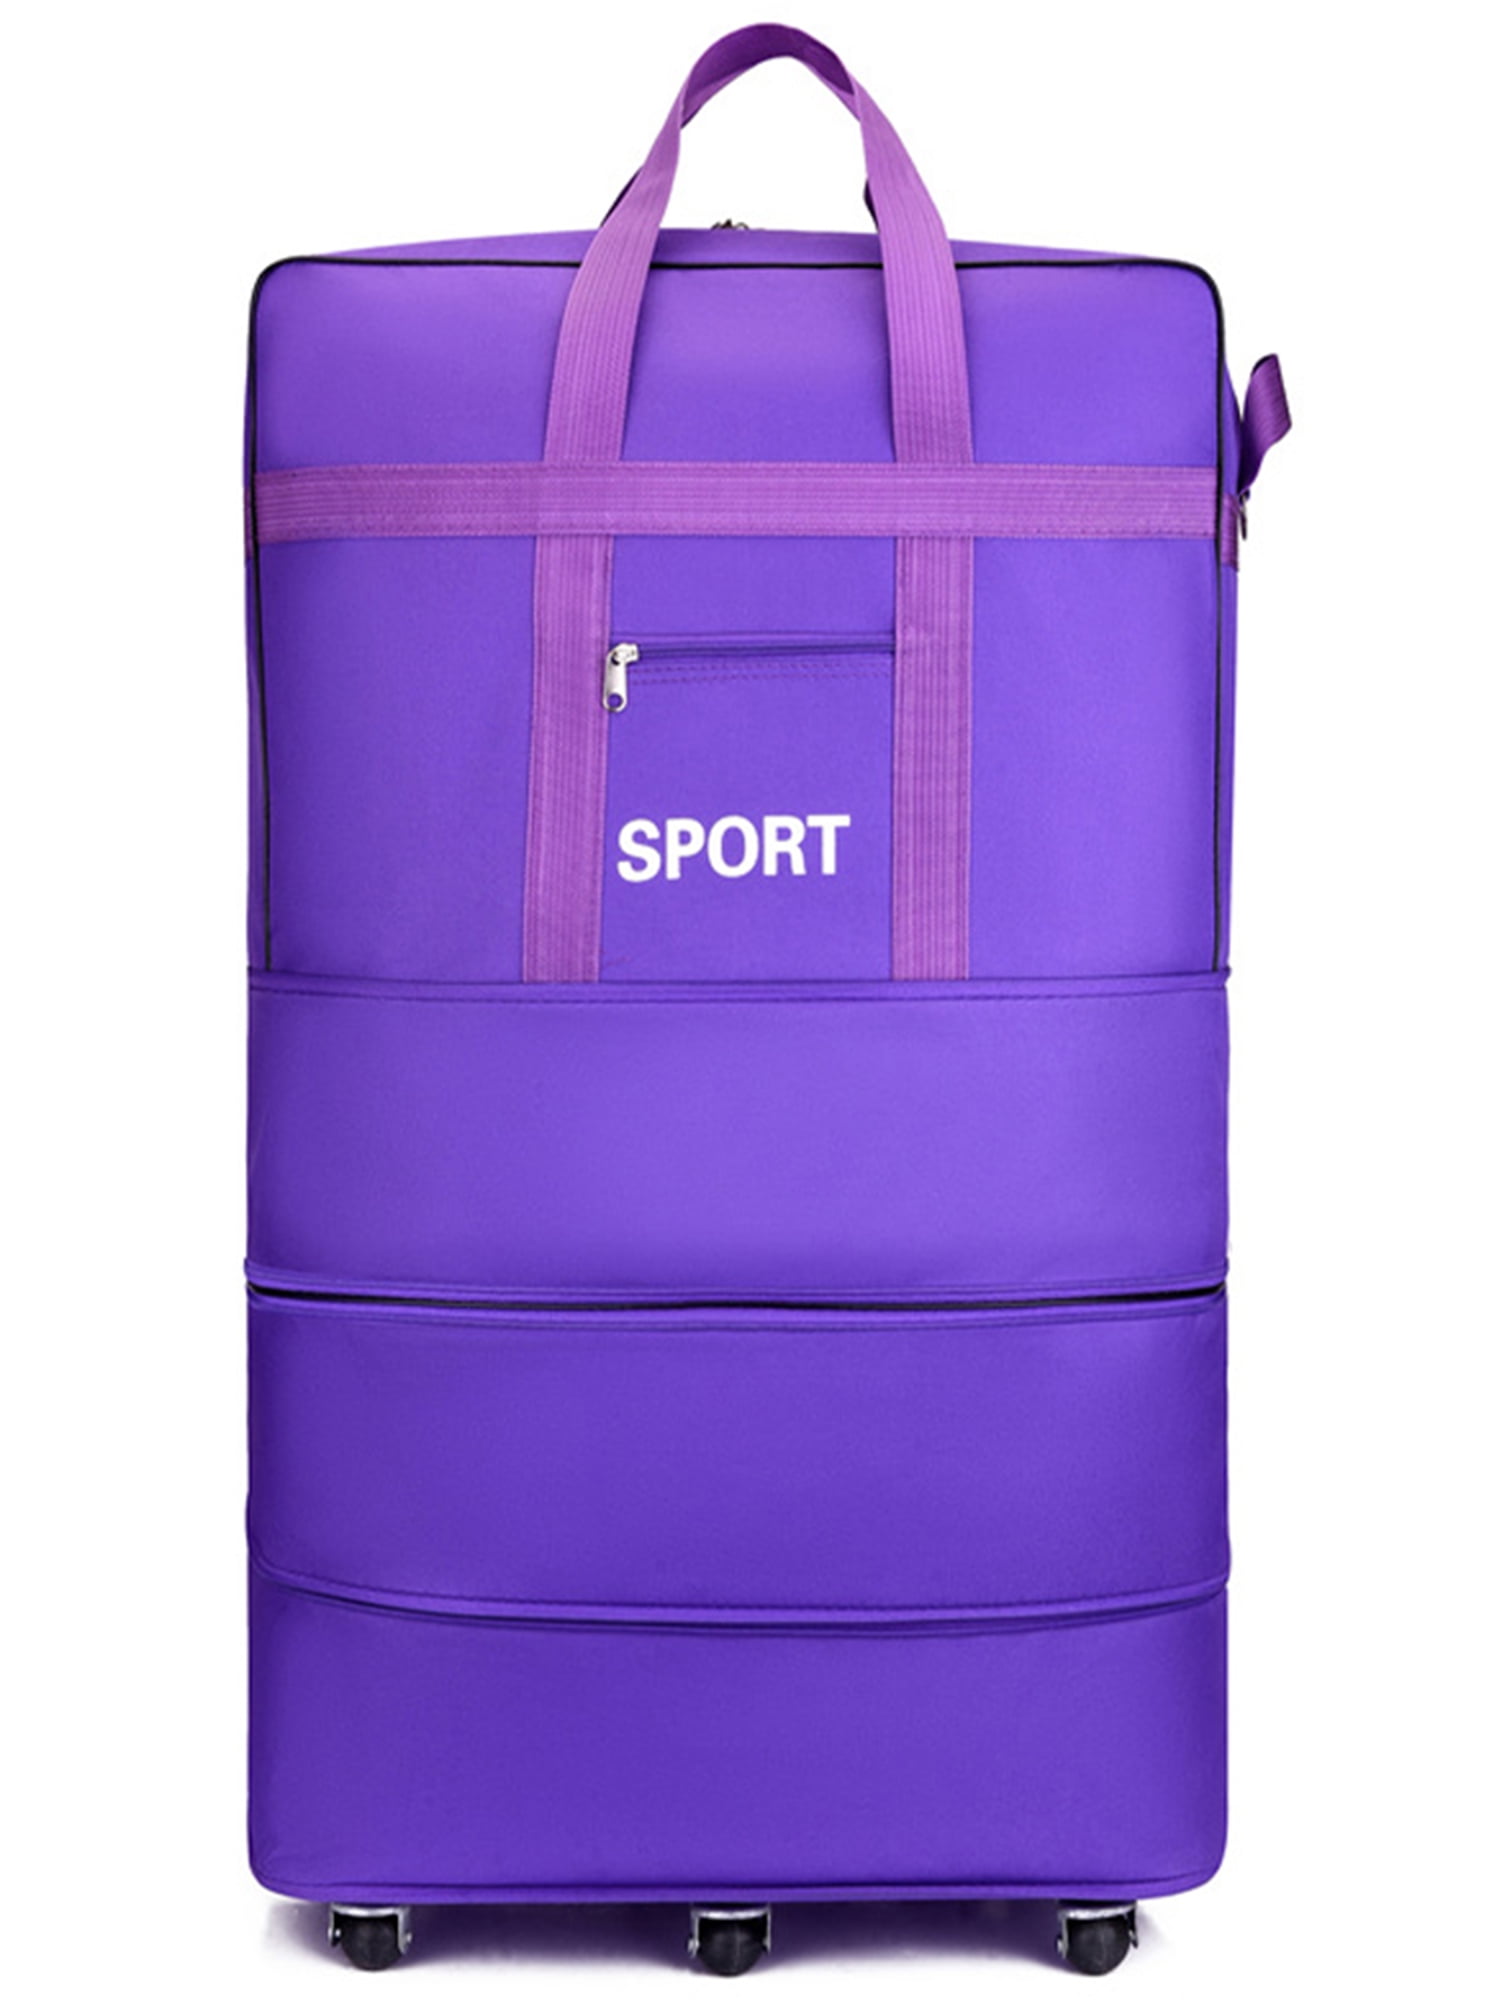 imiomo Travel Gym Duffel Bag - Weekender Bags for Women, Large Tote  Overnight Bag, Sports Shoulder Hospital Bag